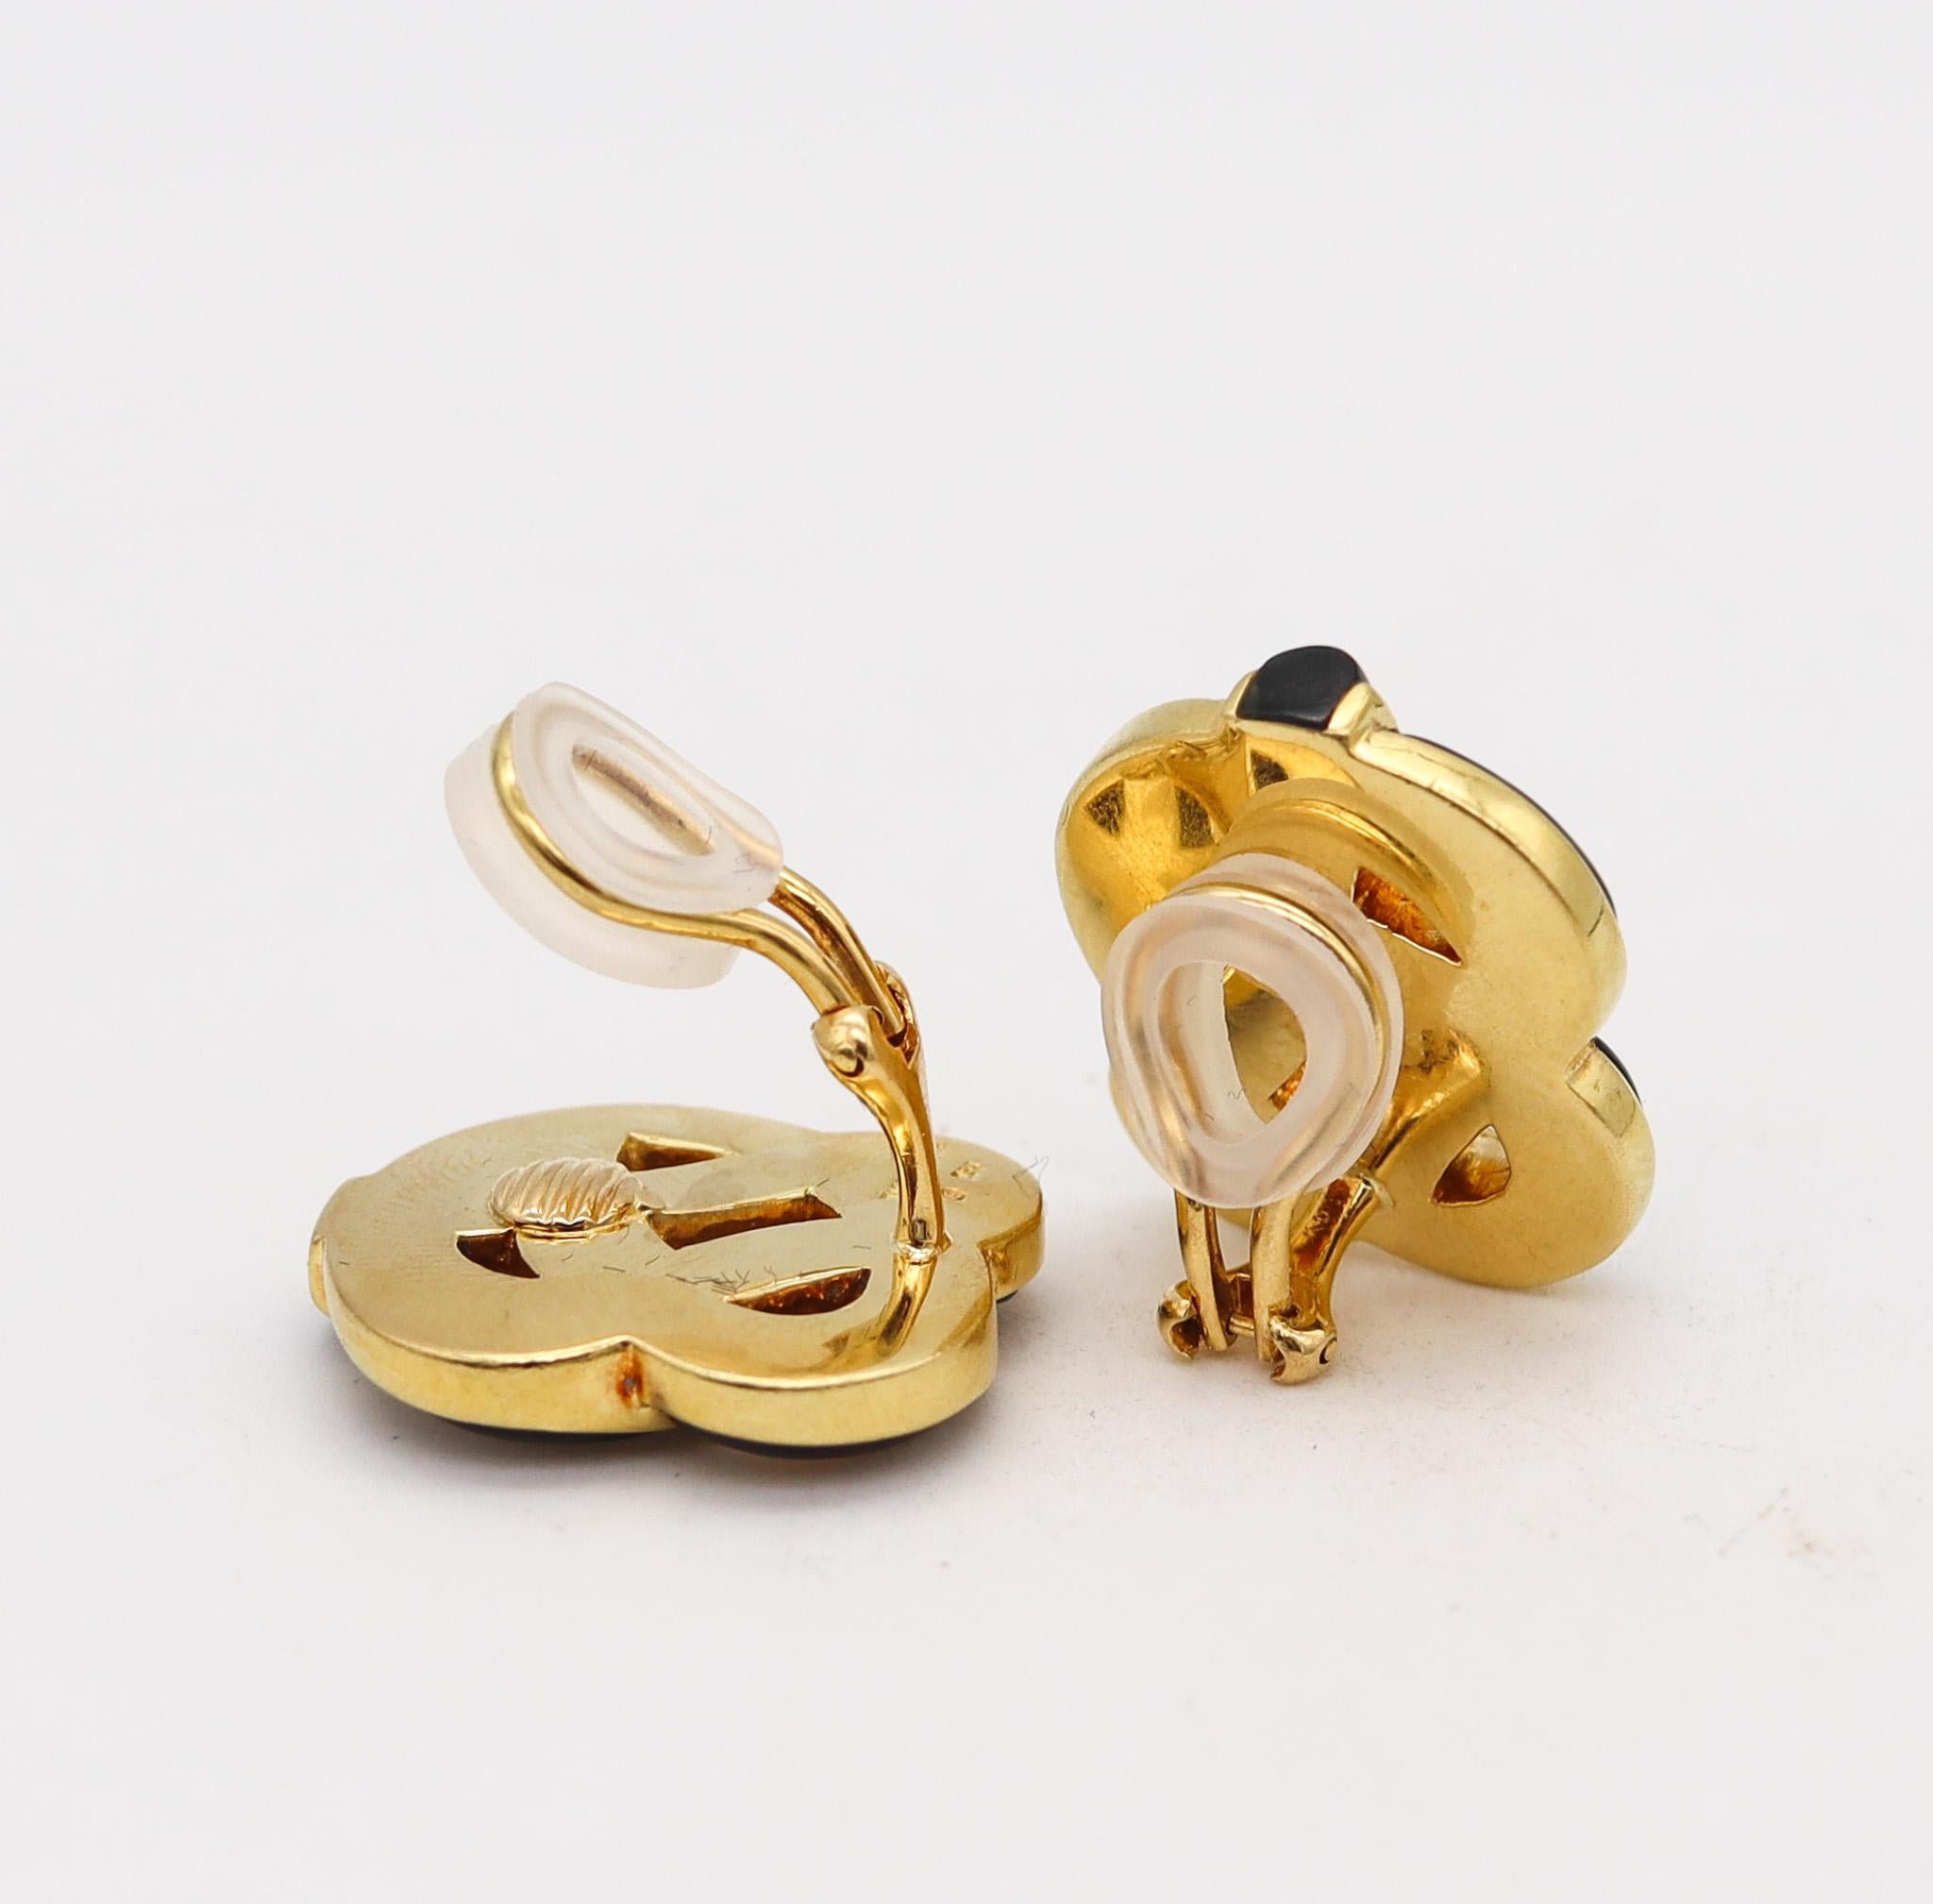 Modernist Tiffany & Co. Angela Cummings Knots Earrings in 18kt Yellow Gold with Black Jade